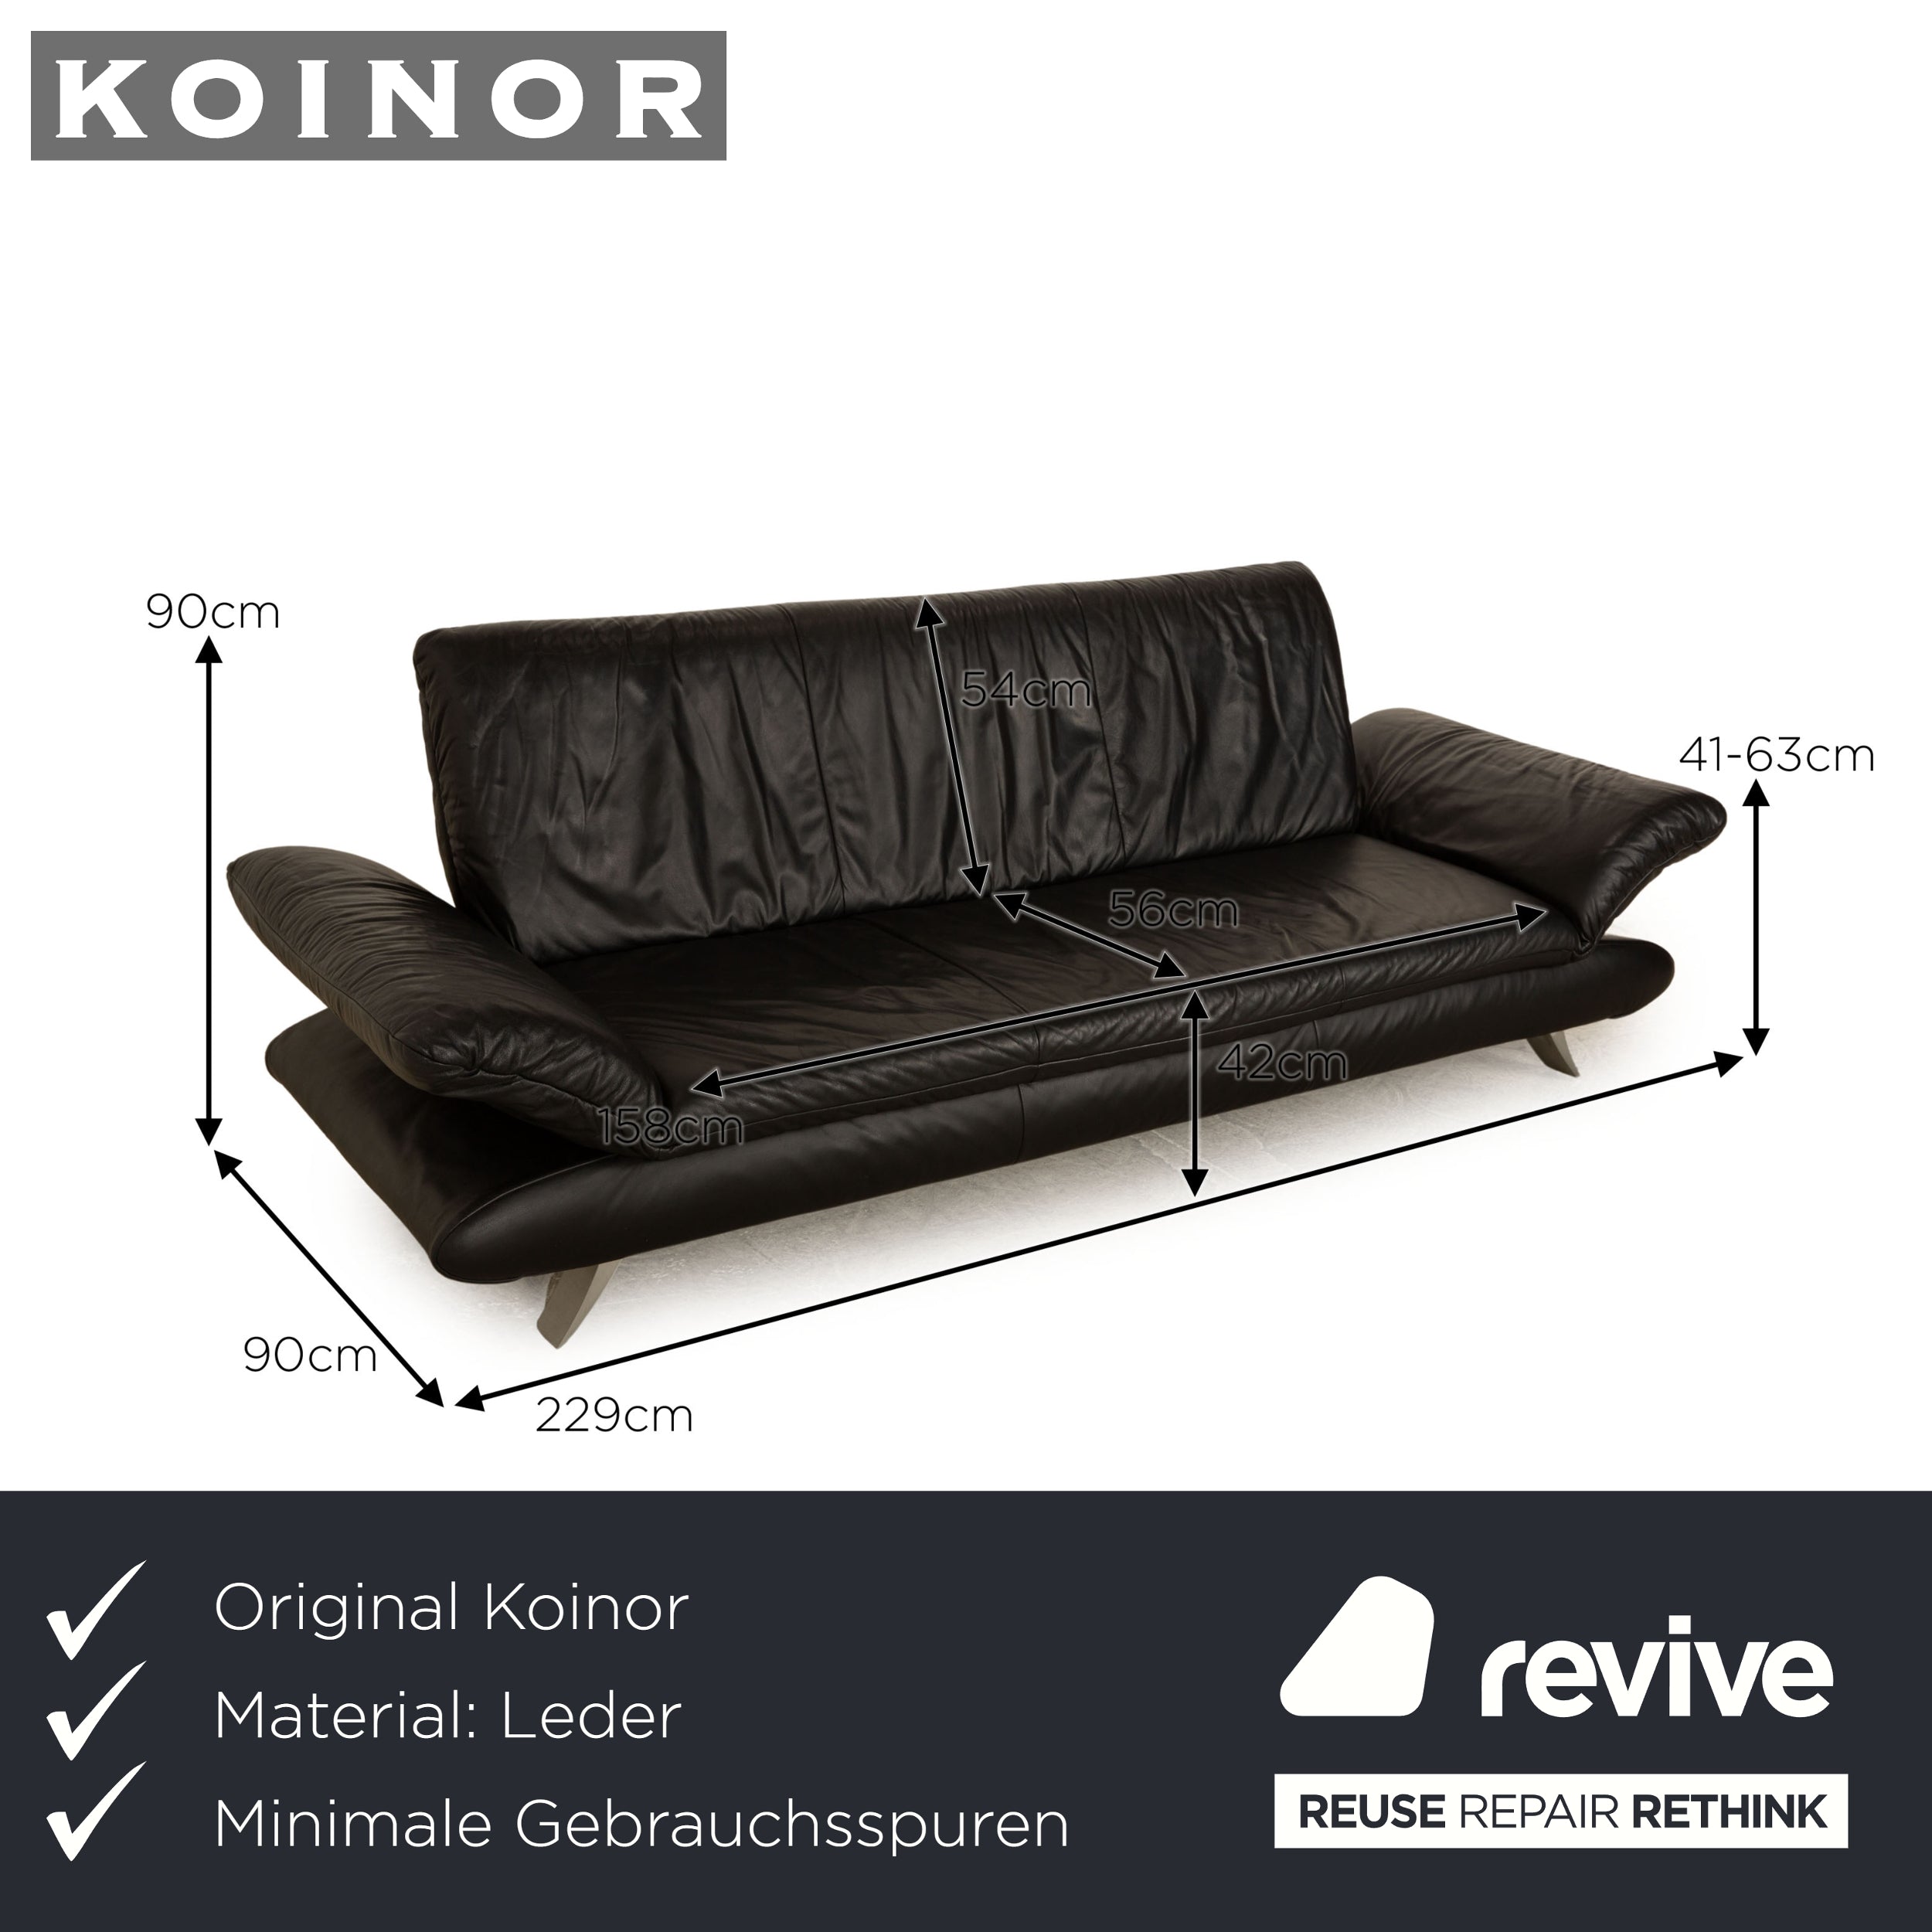 Koinor Rossini Leder Dreisitzer Schwarz Sofa Couch manuelle Funktion